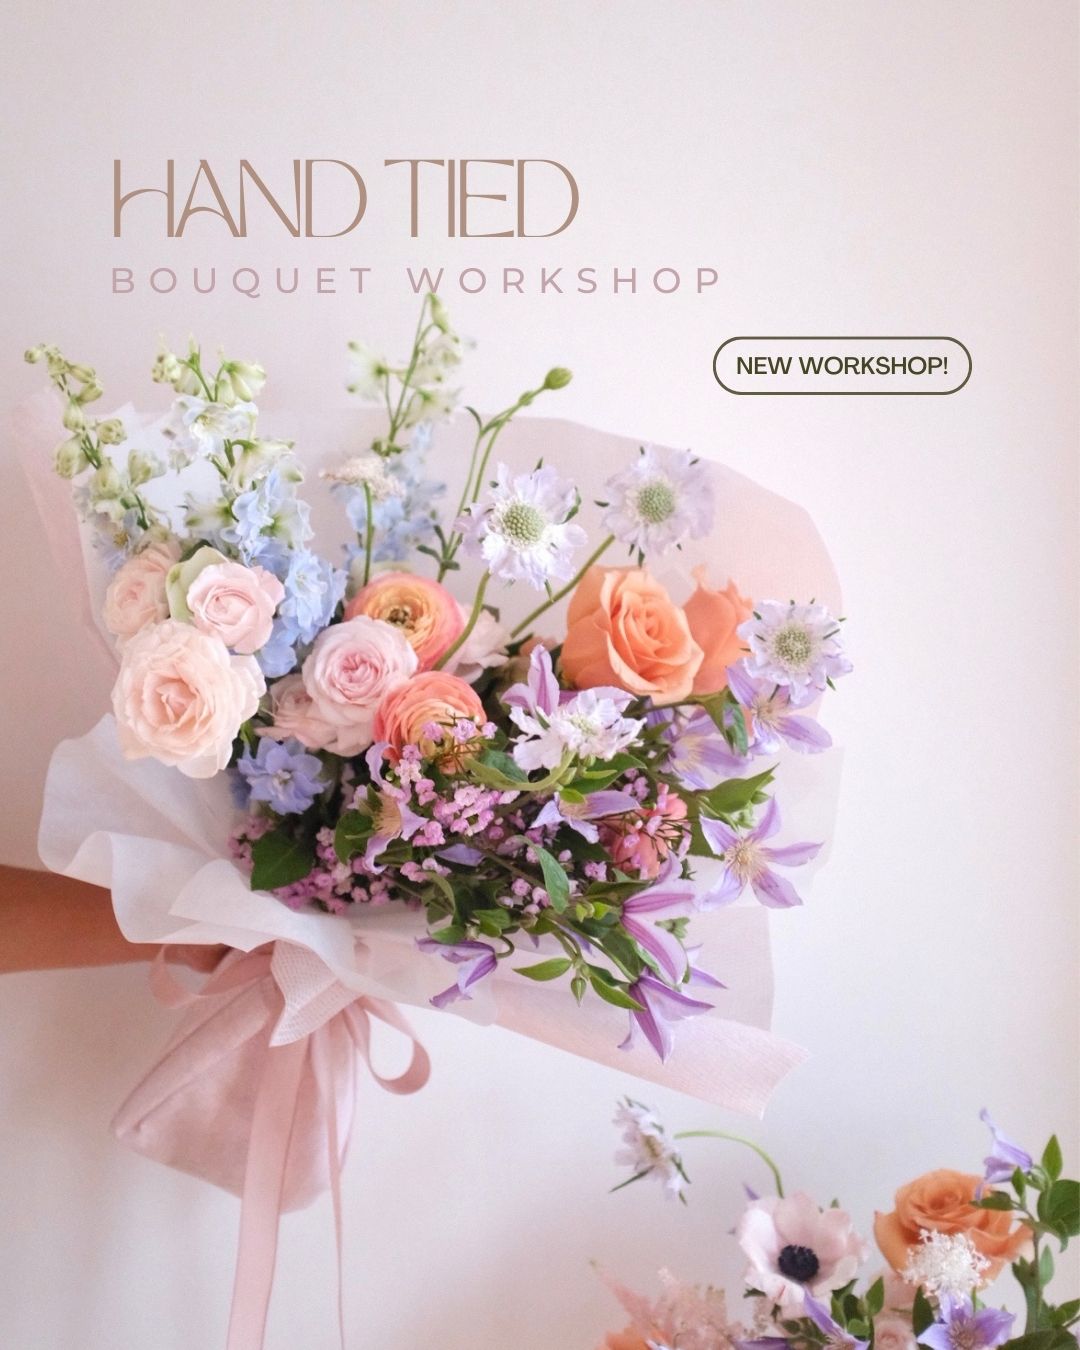 <Workshop> 19 Nov Handtied bouquet workshop